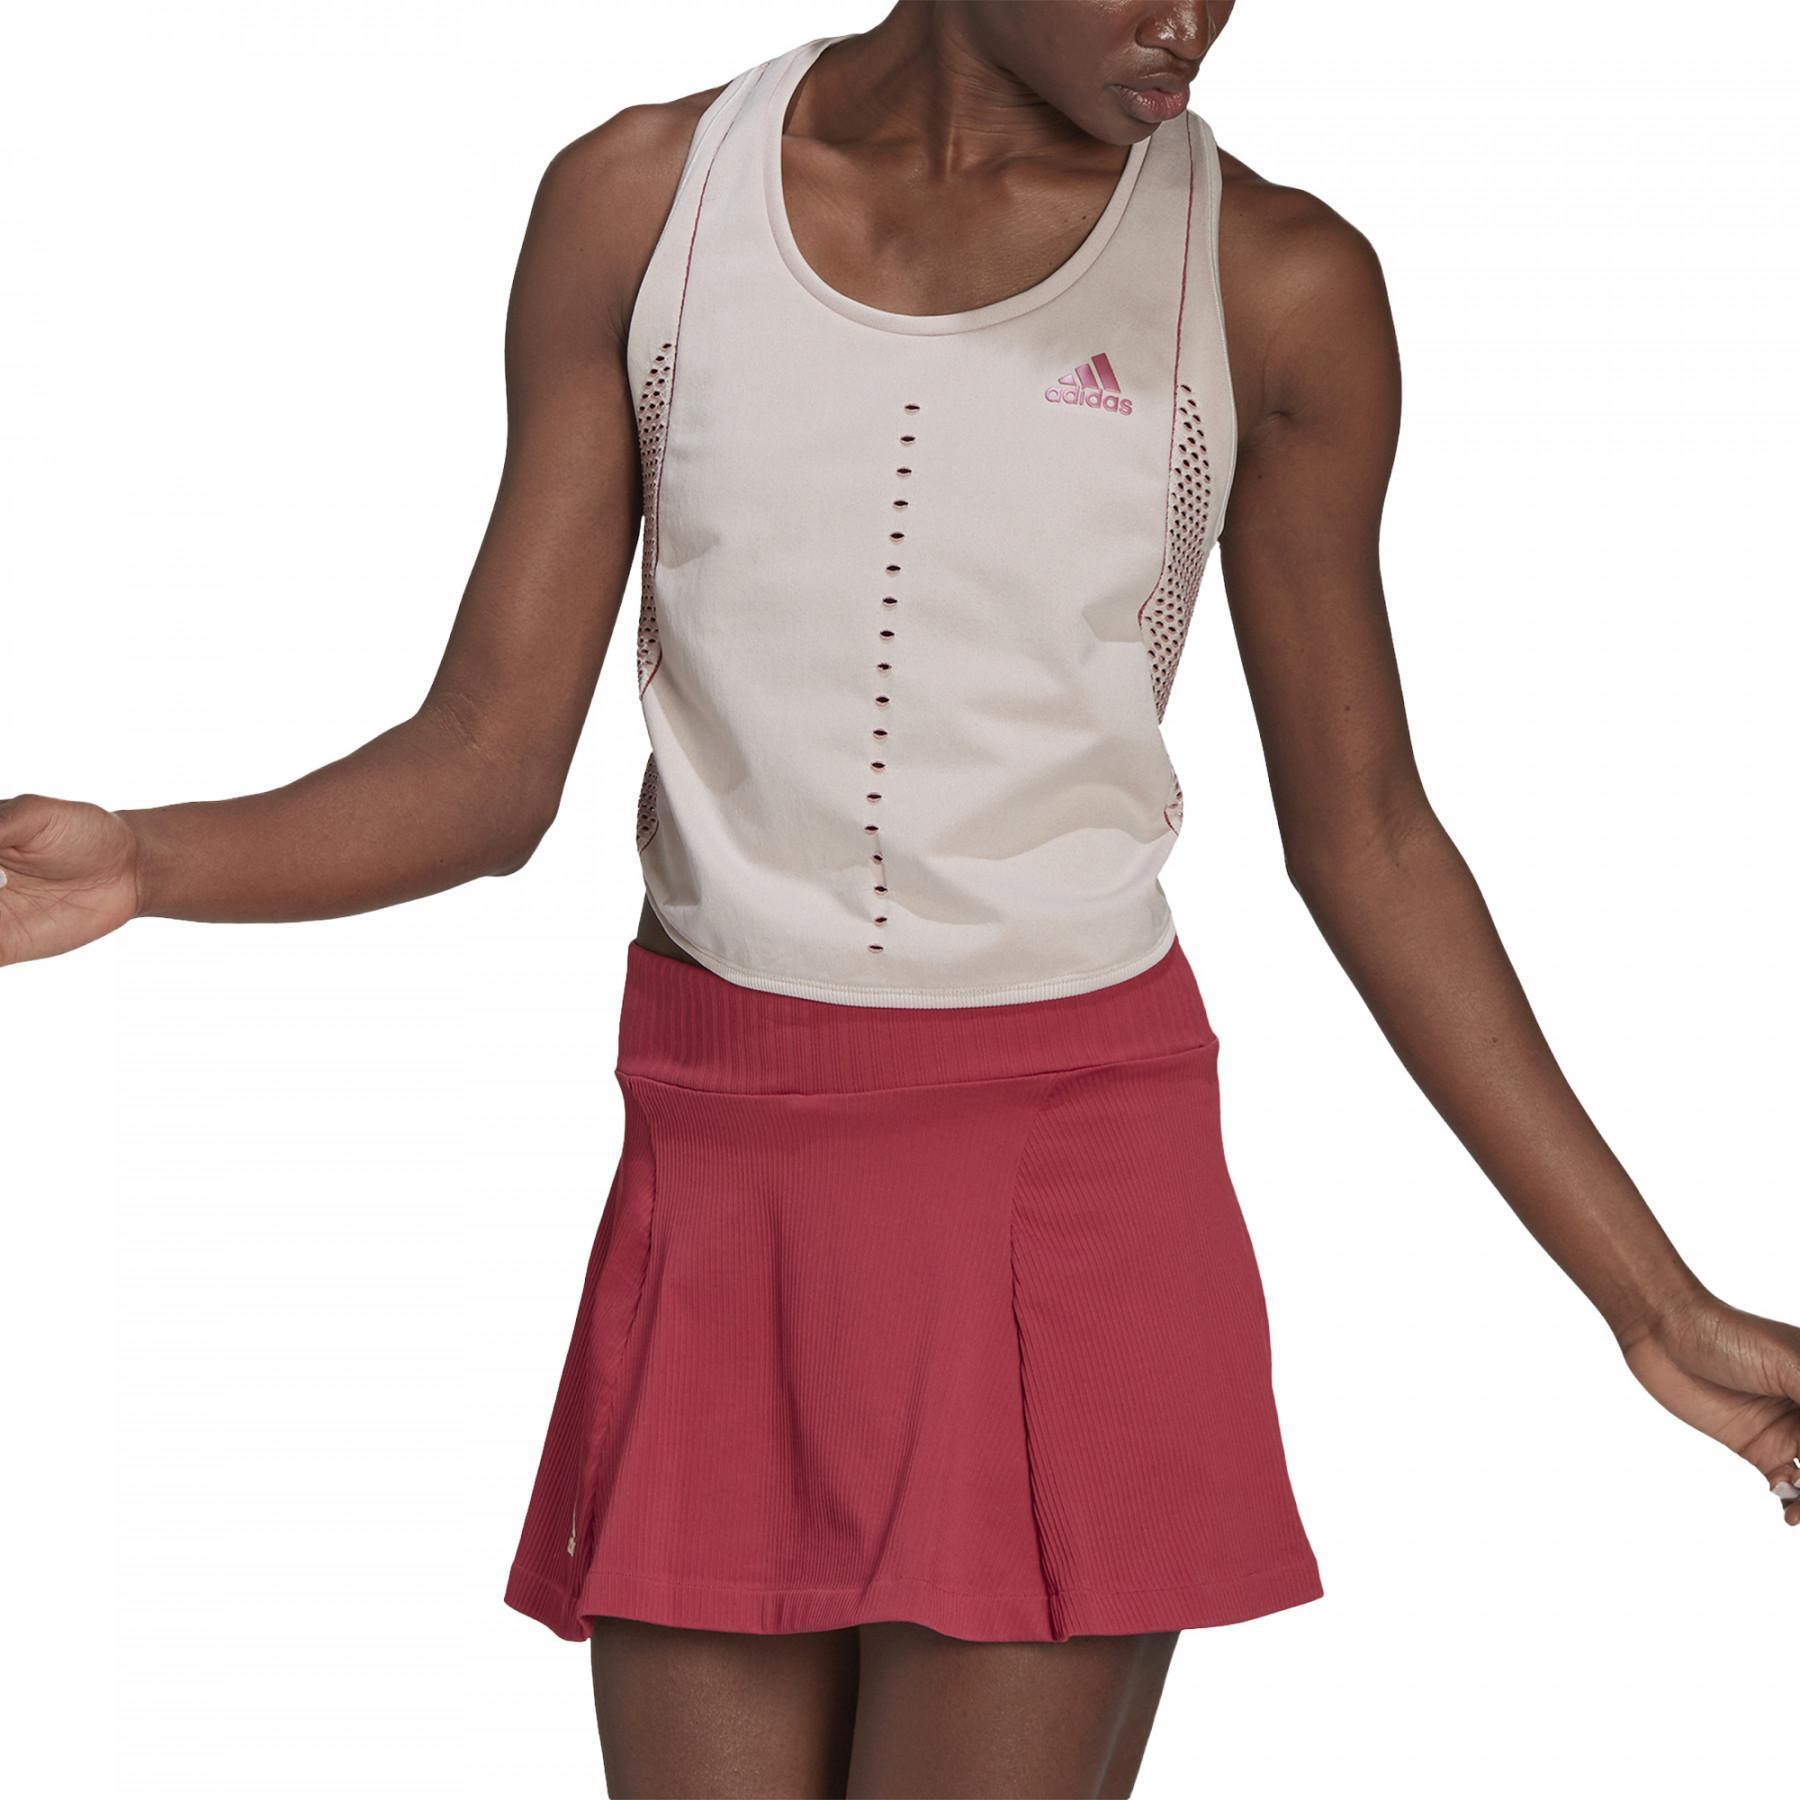 Women's knitted tank top adidas Tennis Primeblue